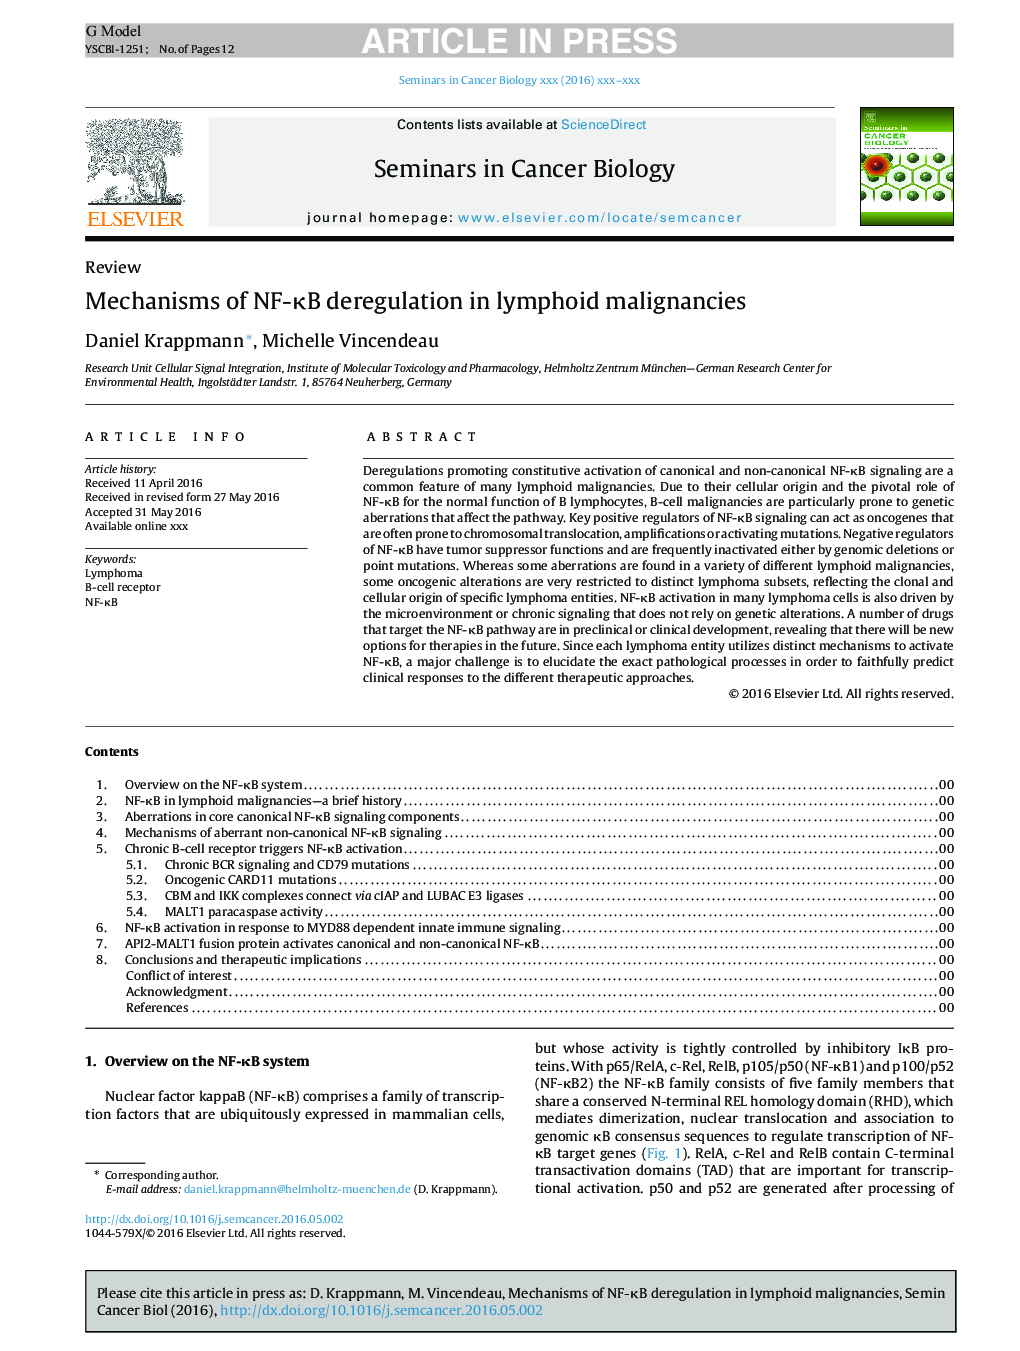 Mechanisms of NF-ÎºB deregulation in lymphoid malignancies